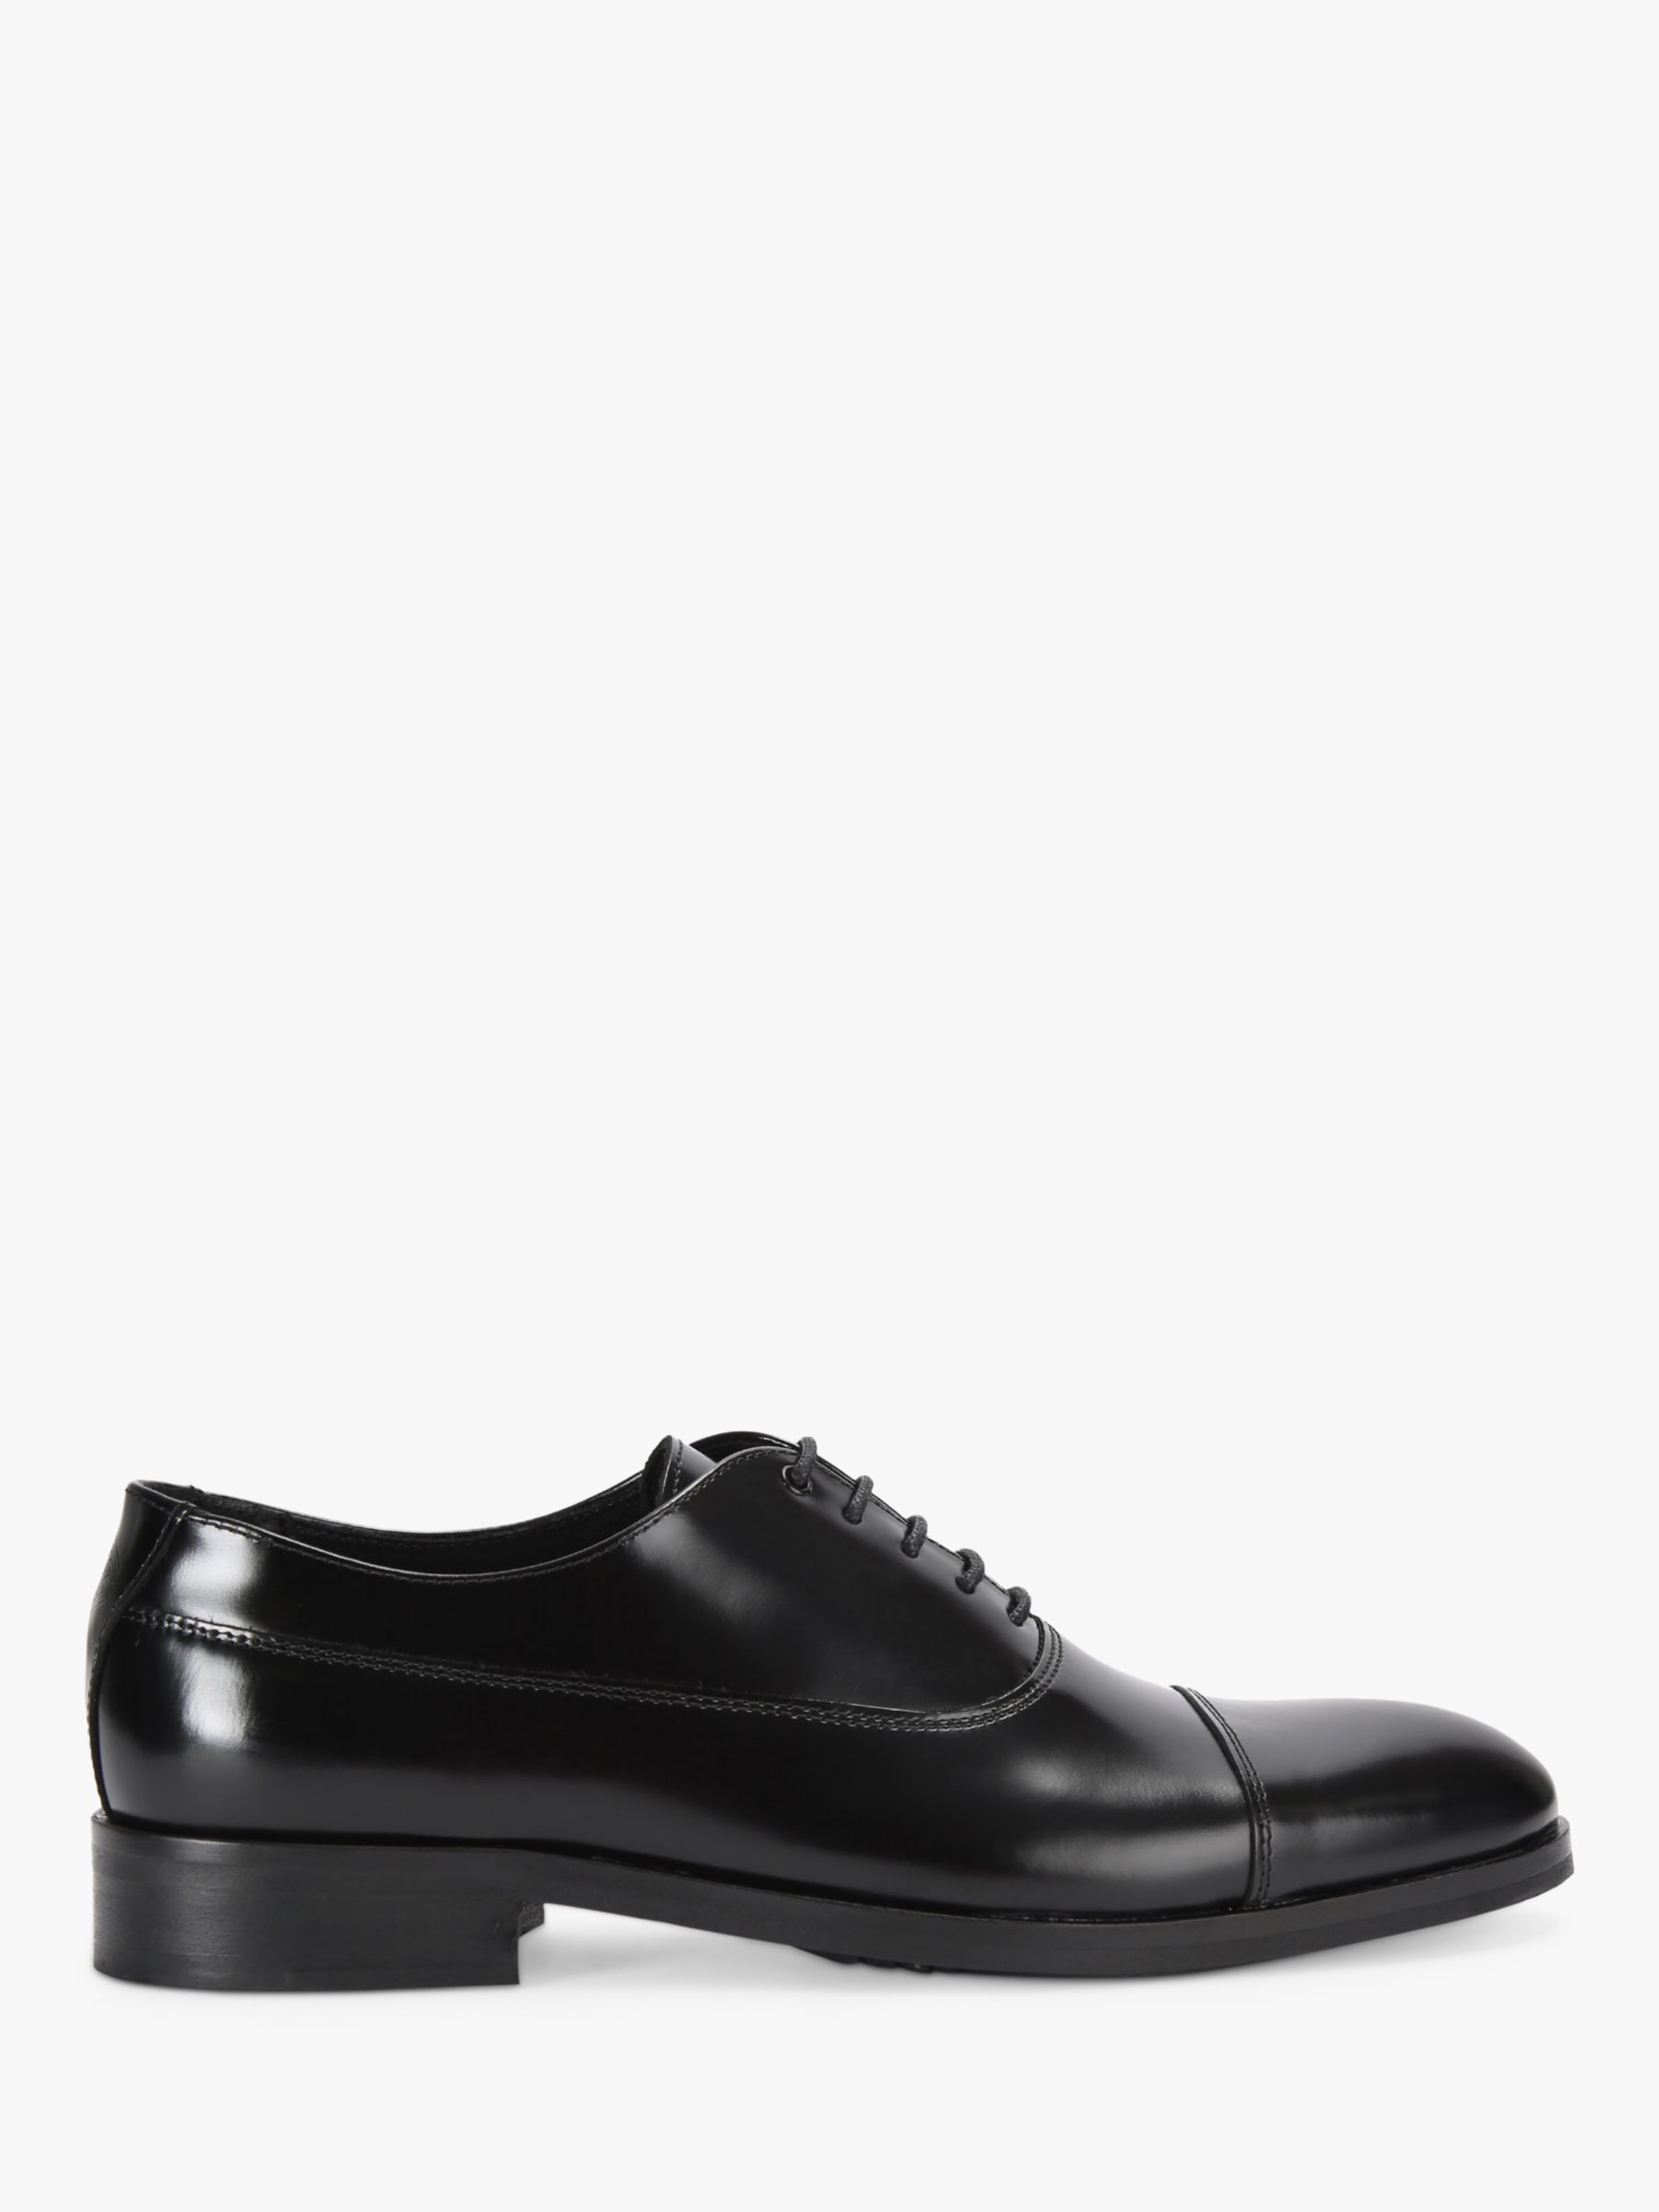 Kurt Geiger London Hunter Oxford Shoes, Black, 11